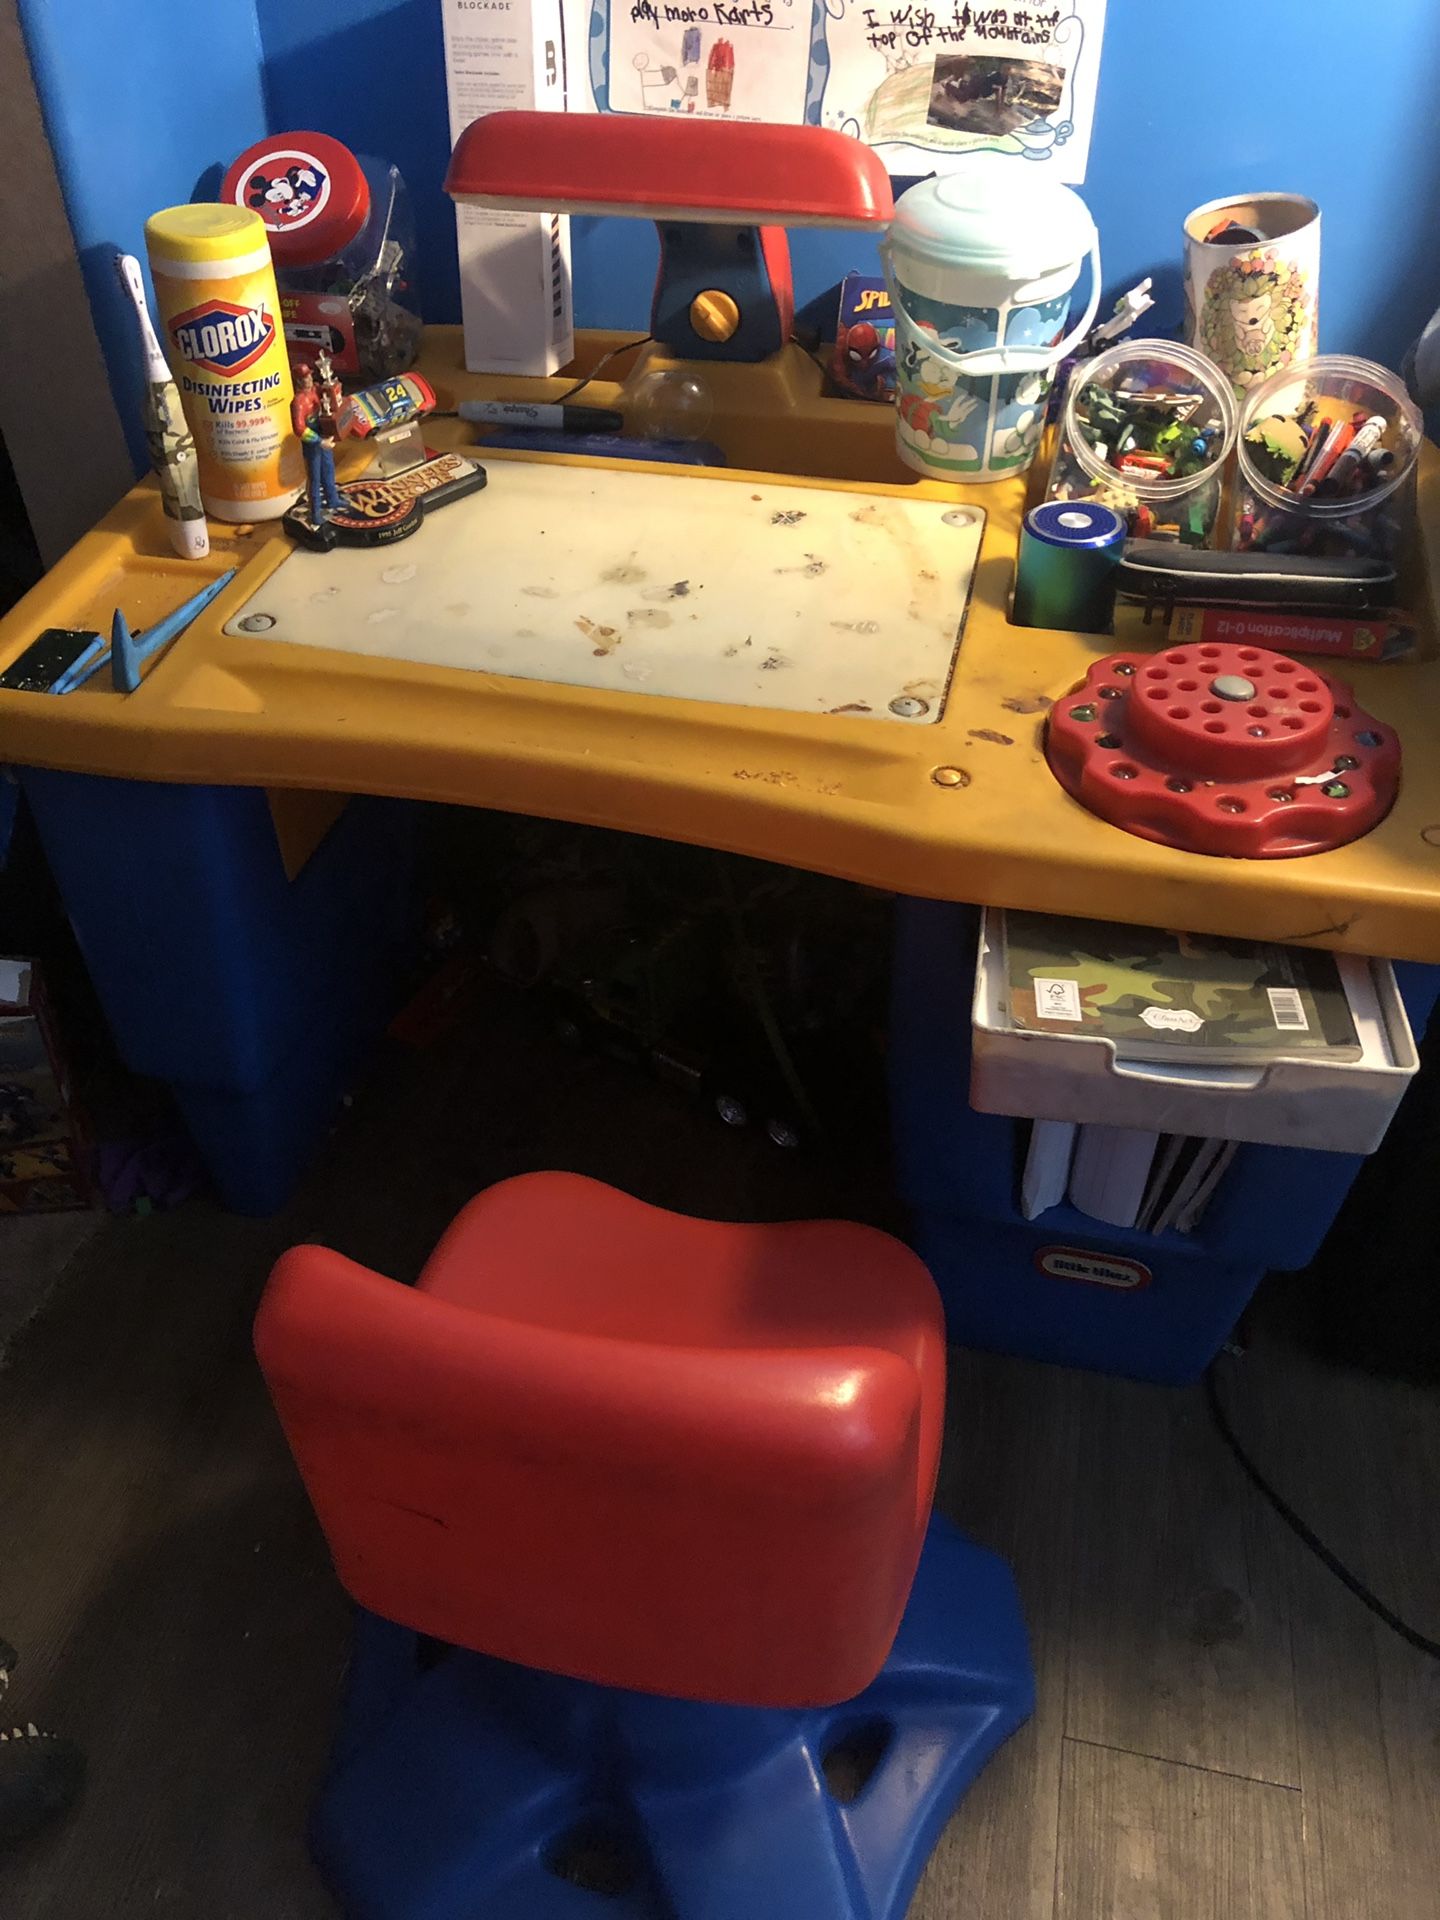 Kids desk